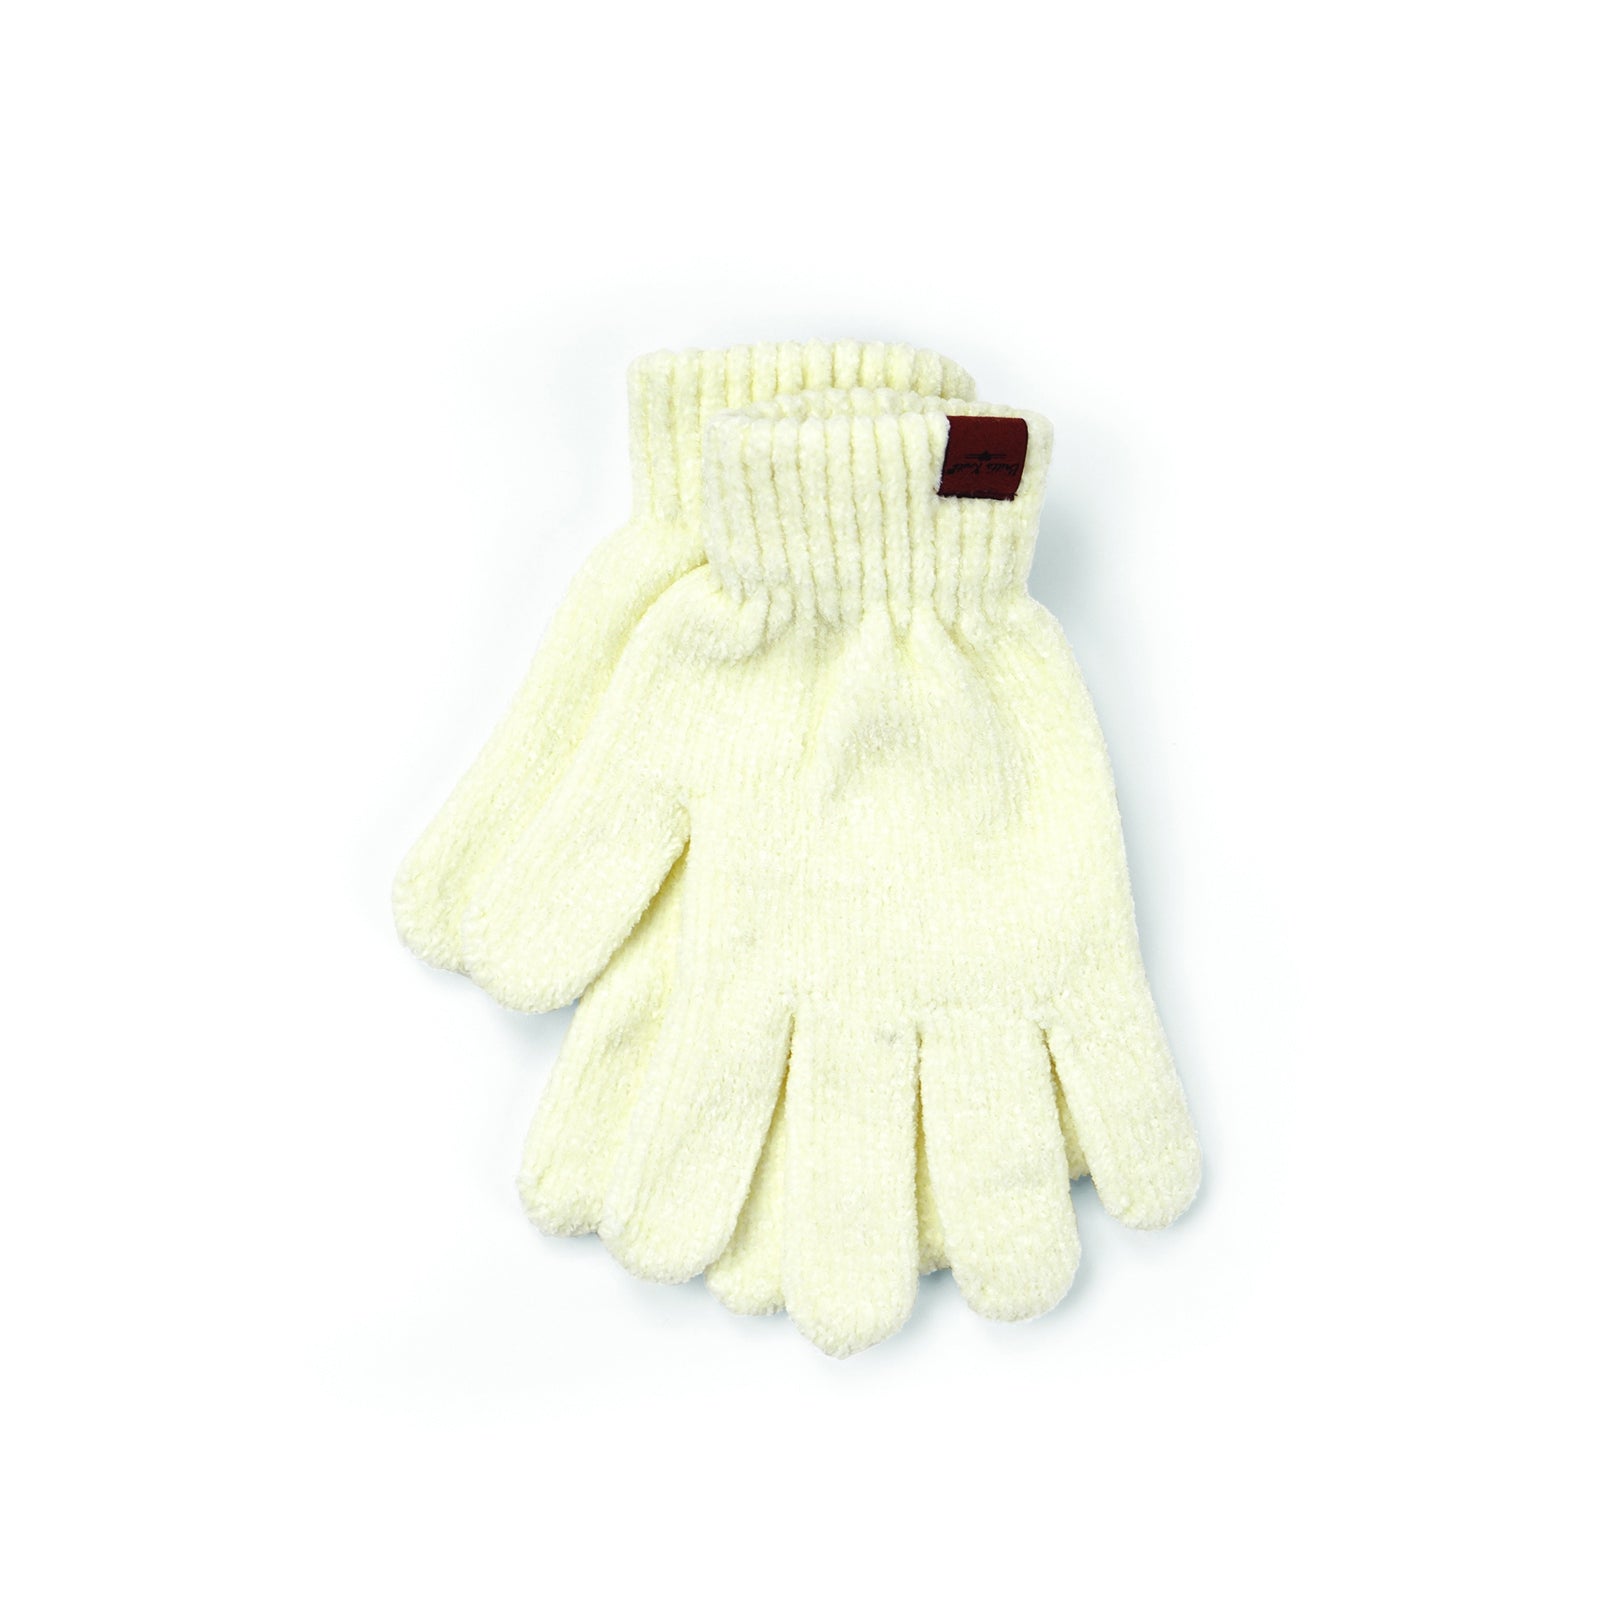 Beyond Soft Chenille Gloves